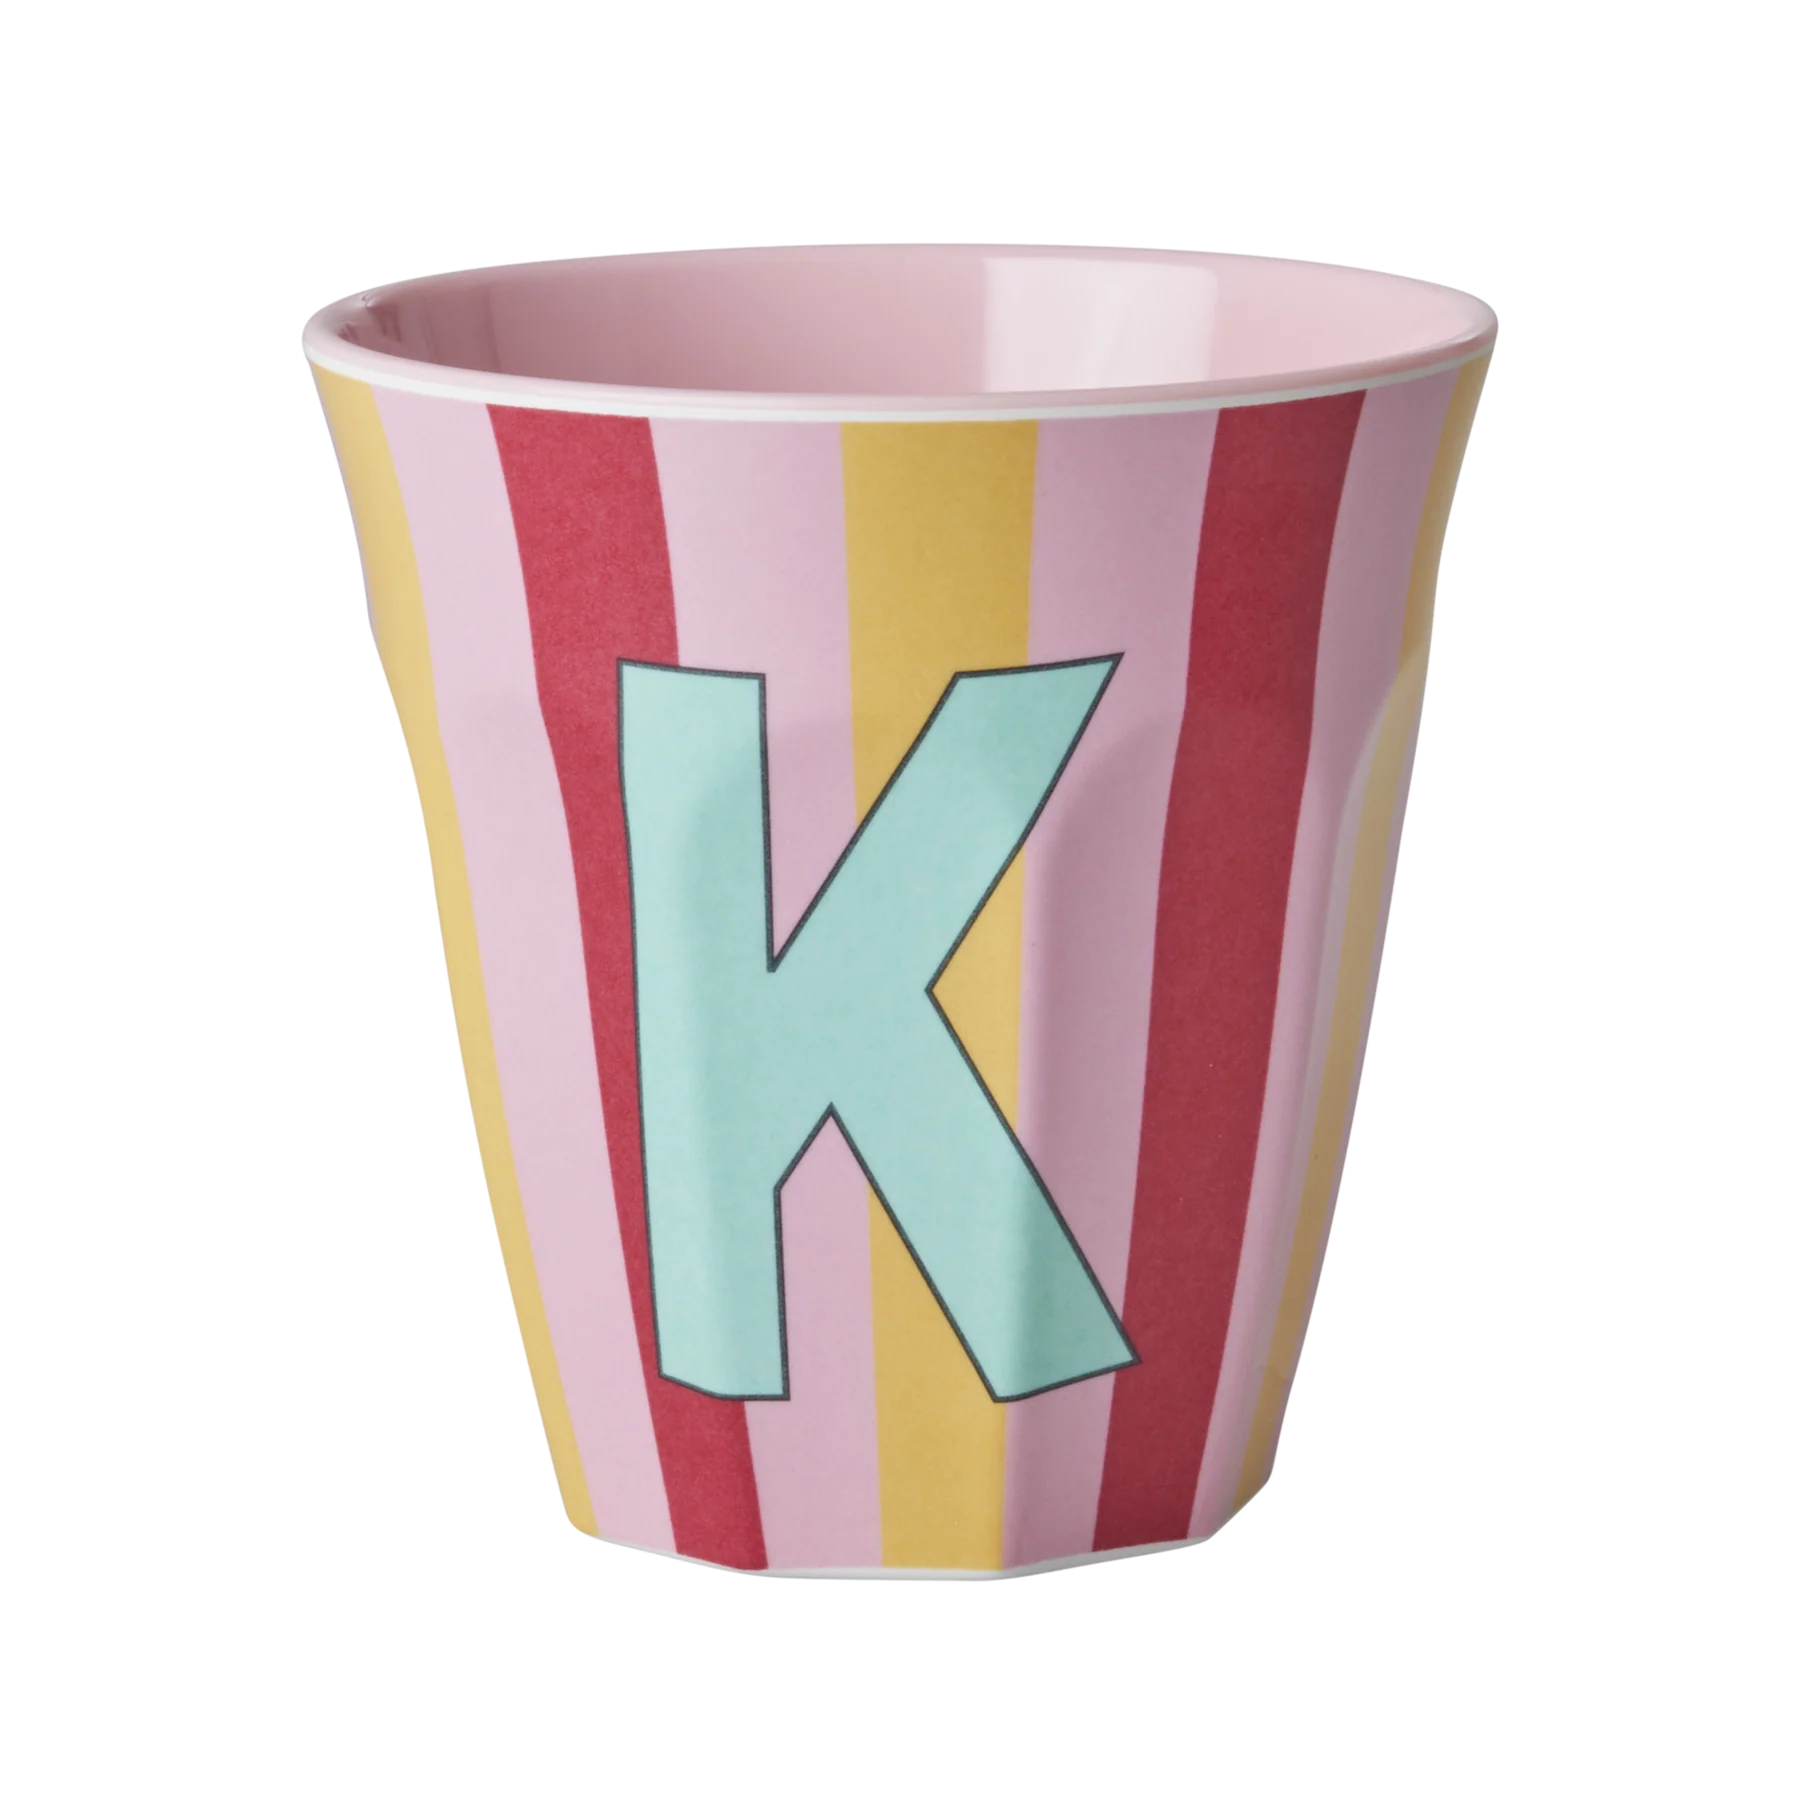 K Pink Stripe Melamine Cup - Rice DK